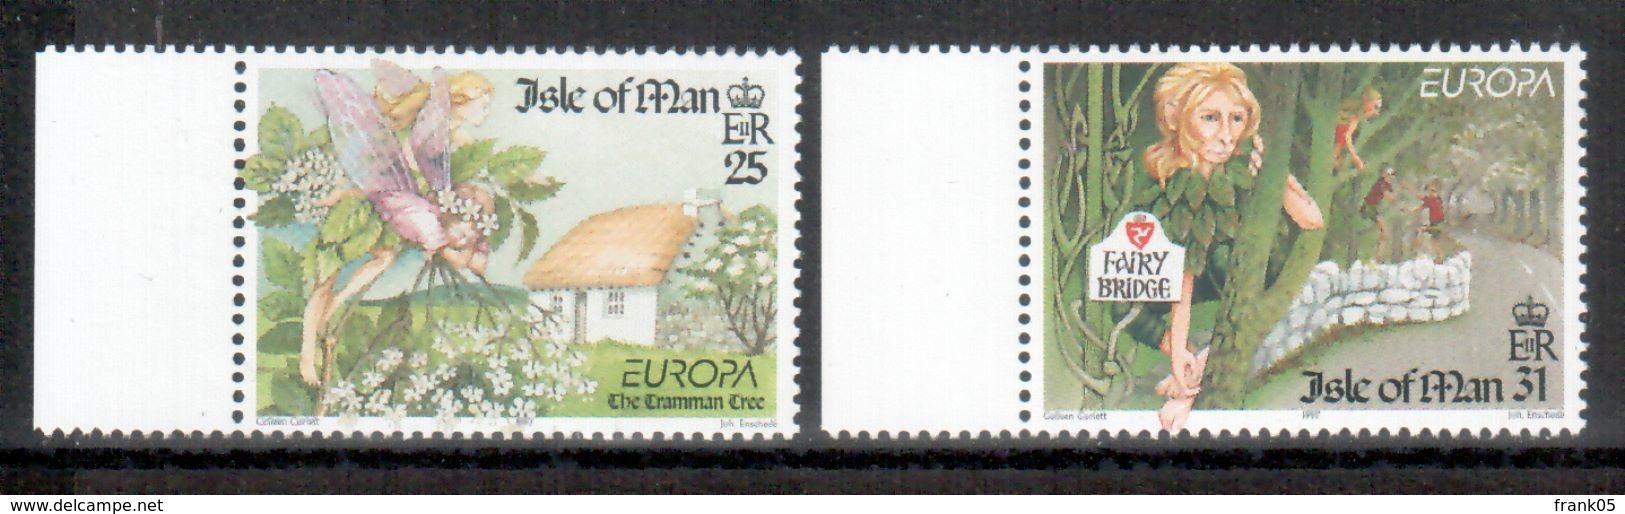 Insel Man / Isle Of Man / Ile De Man 1997 Satz/set EUROPA ** - 1997